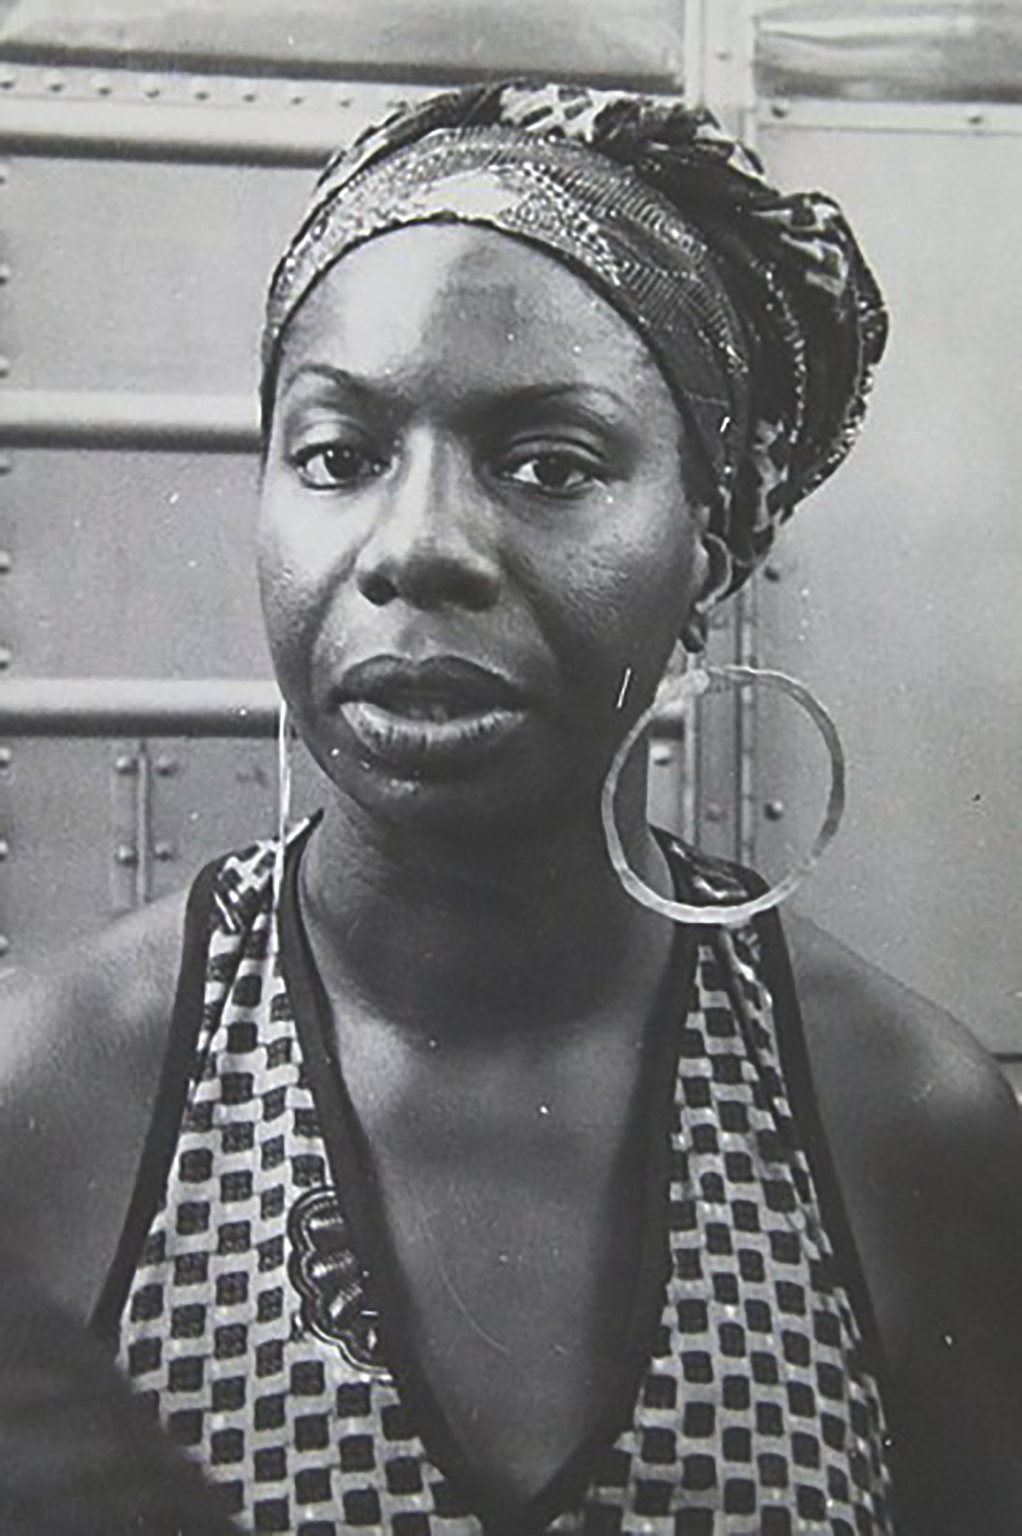 Nina Simone: legendary singer songwriter and civil rights activist